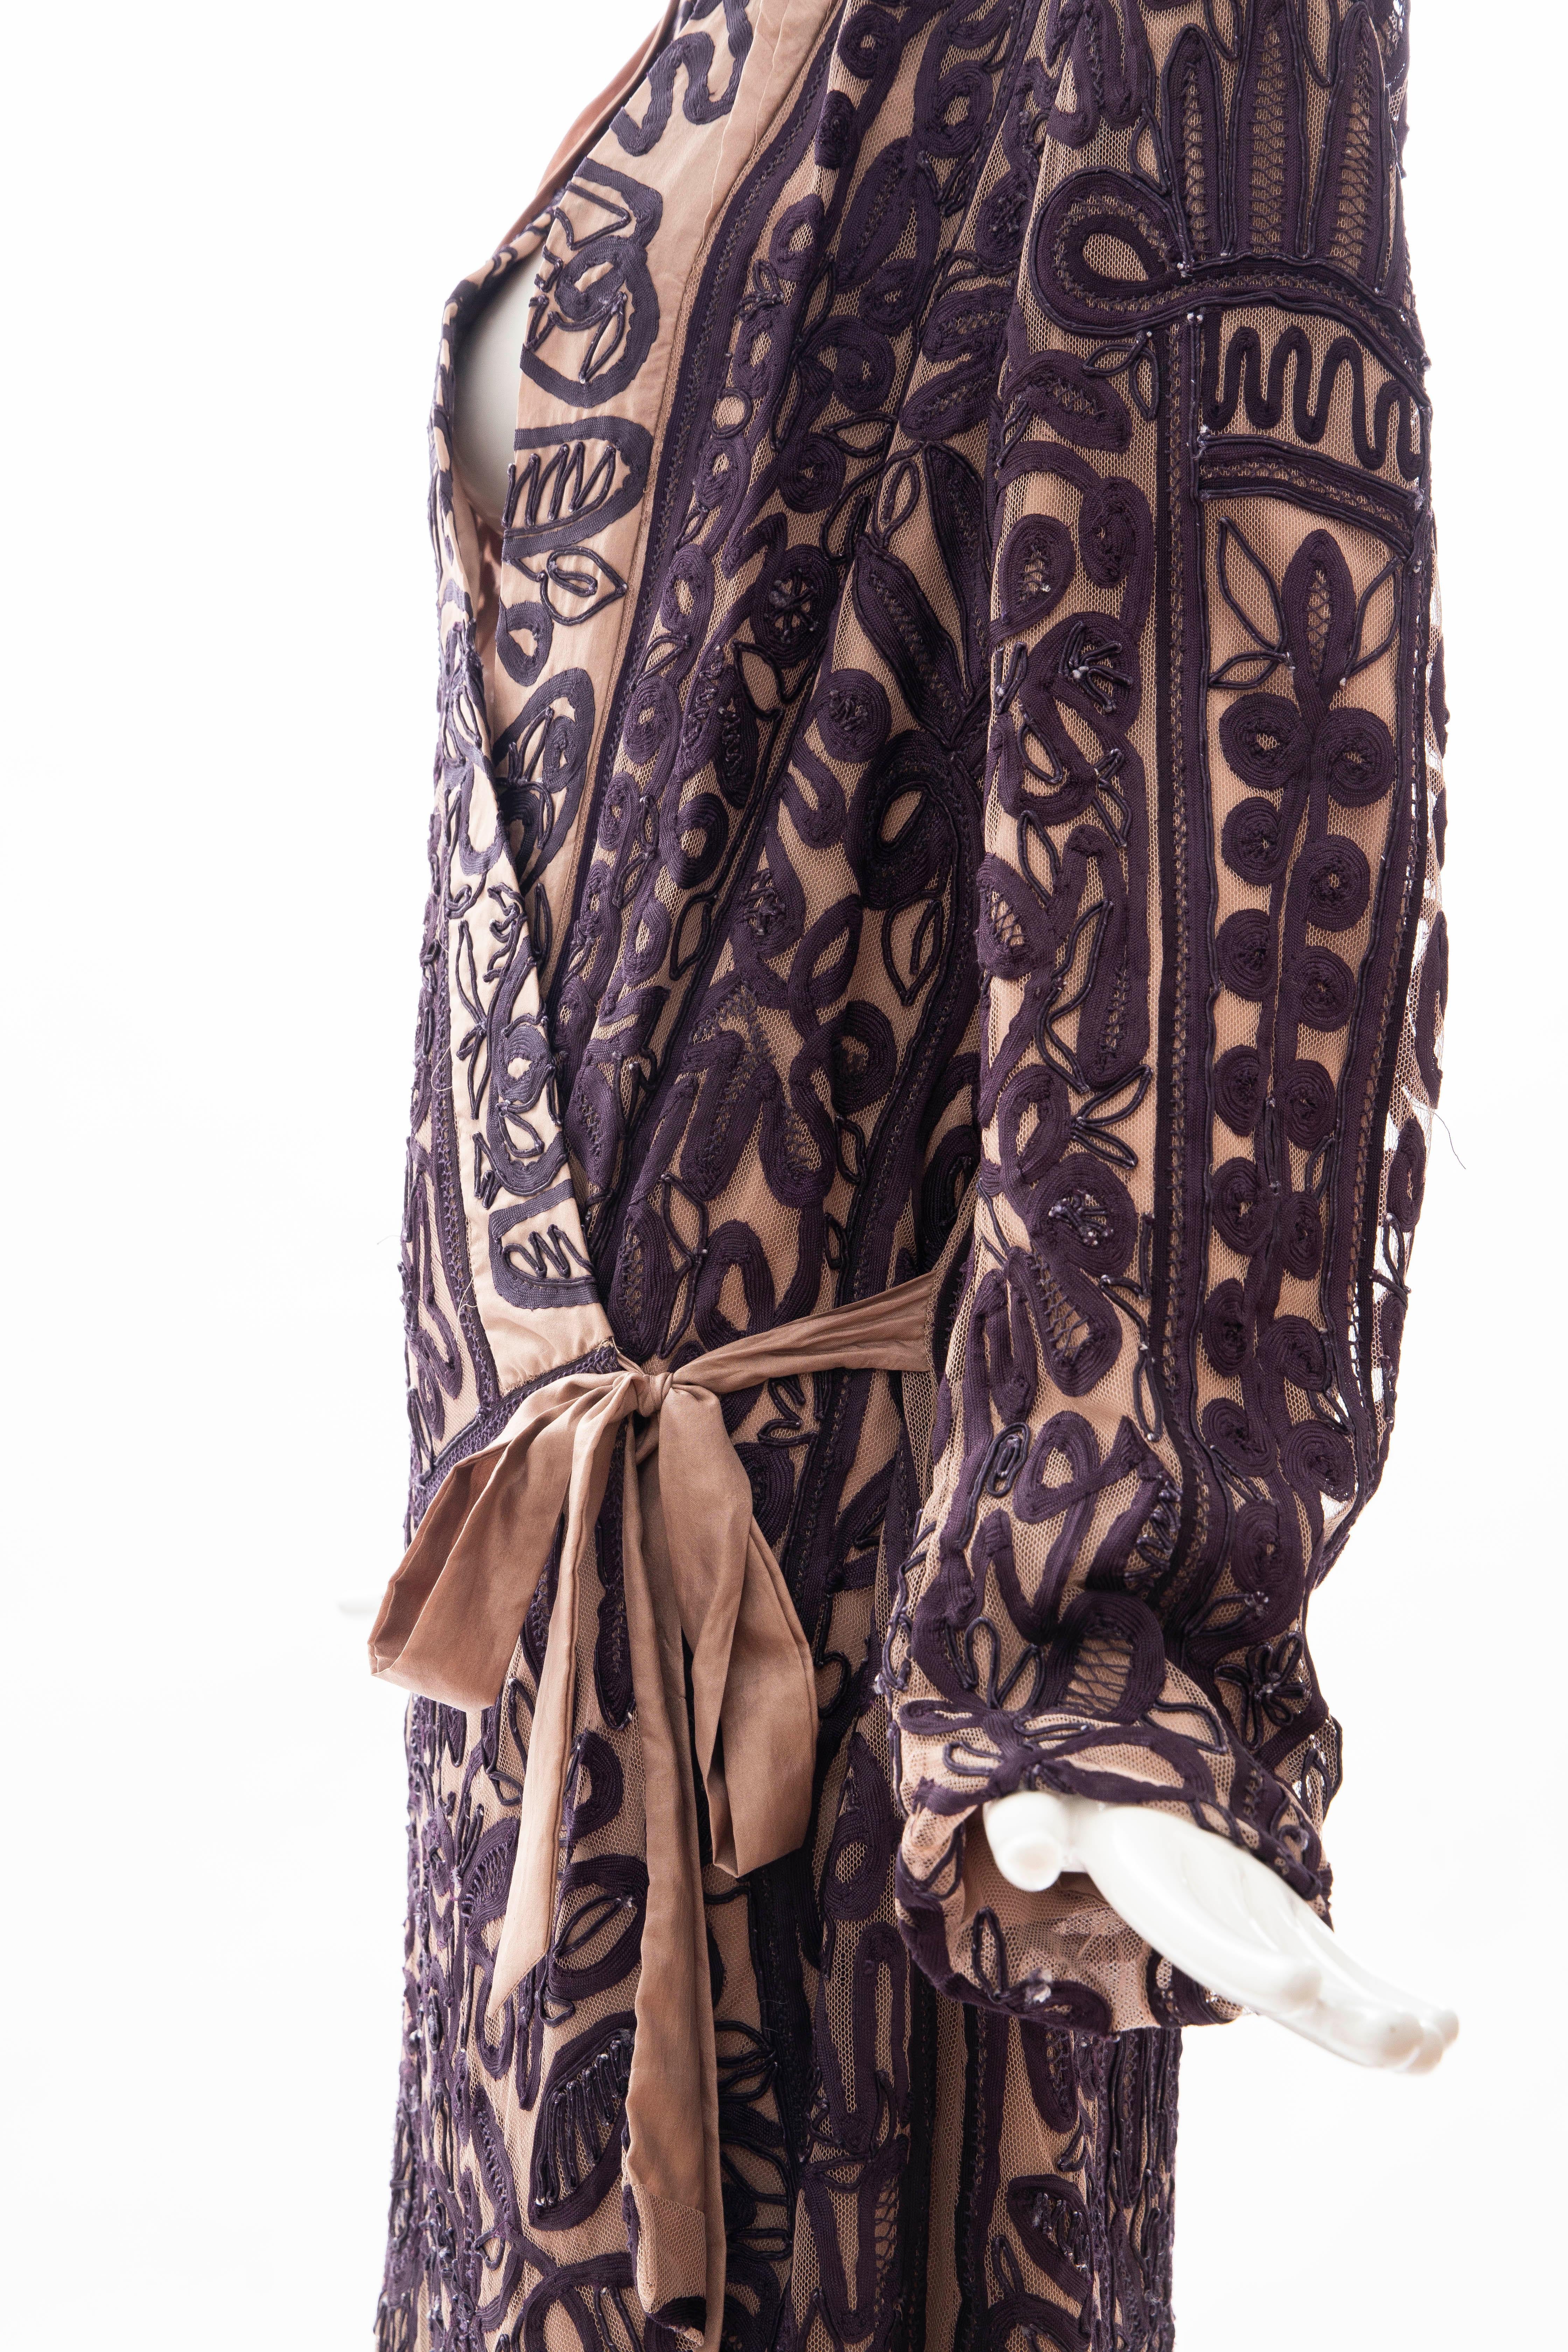 Dries Van Noten Silk Ribbon Embroidered Kimono Jacket For Sale 7